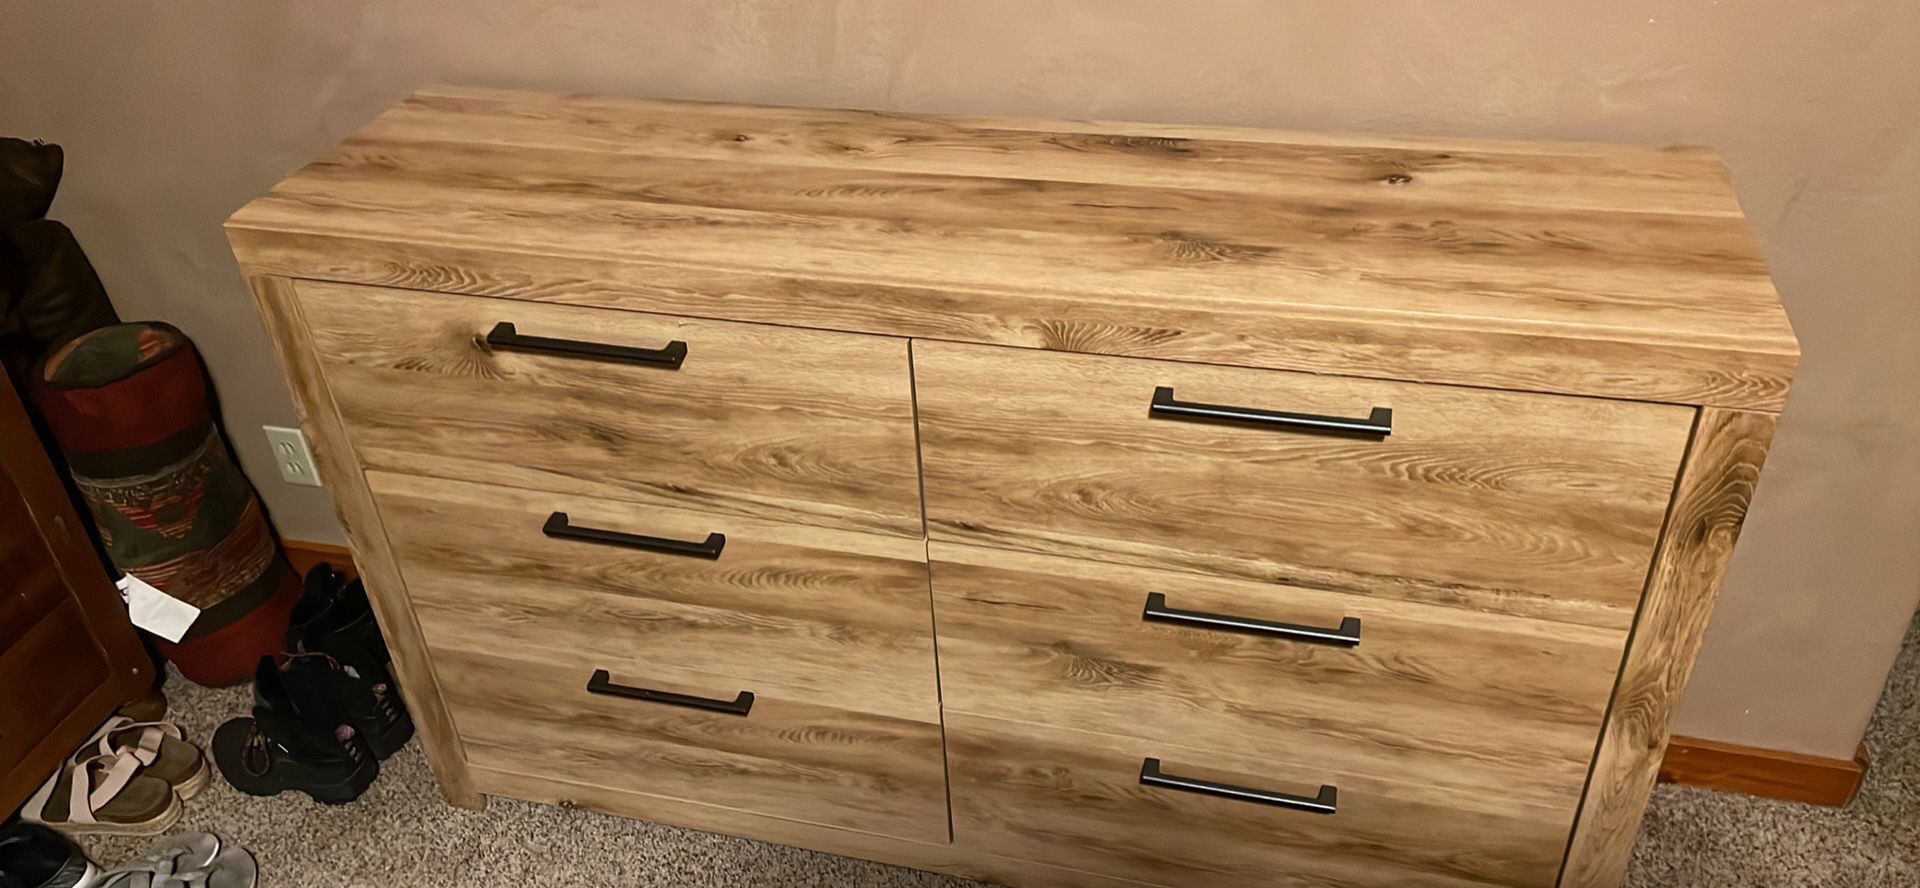 Dresser-6 Drawer